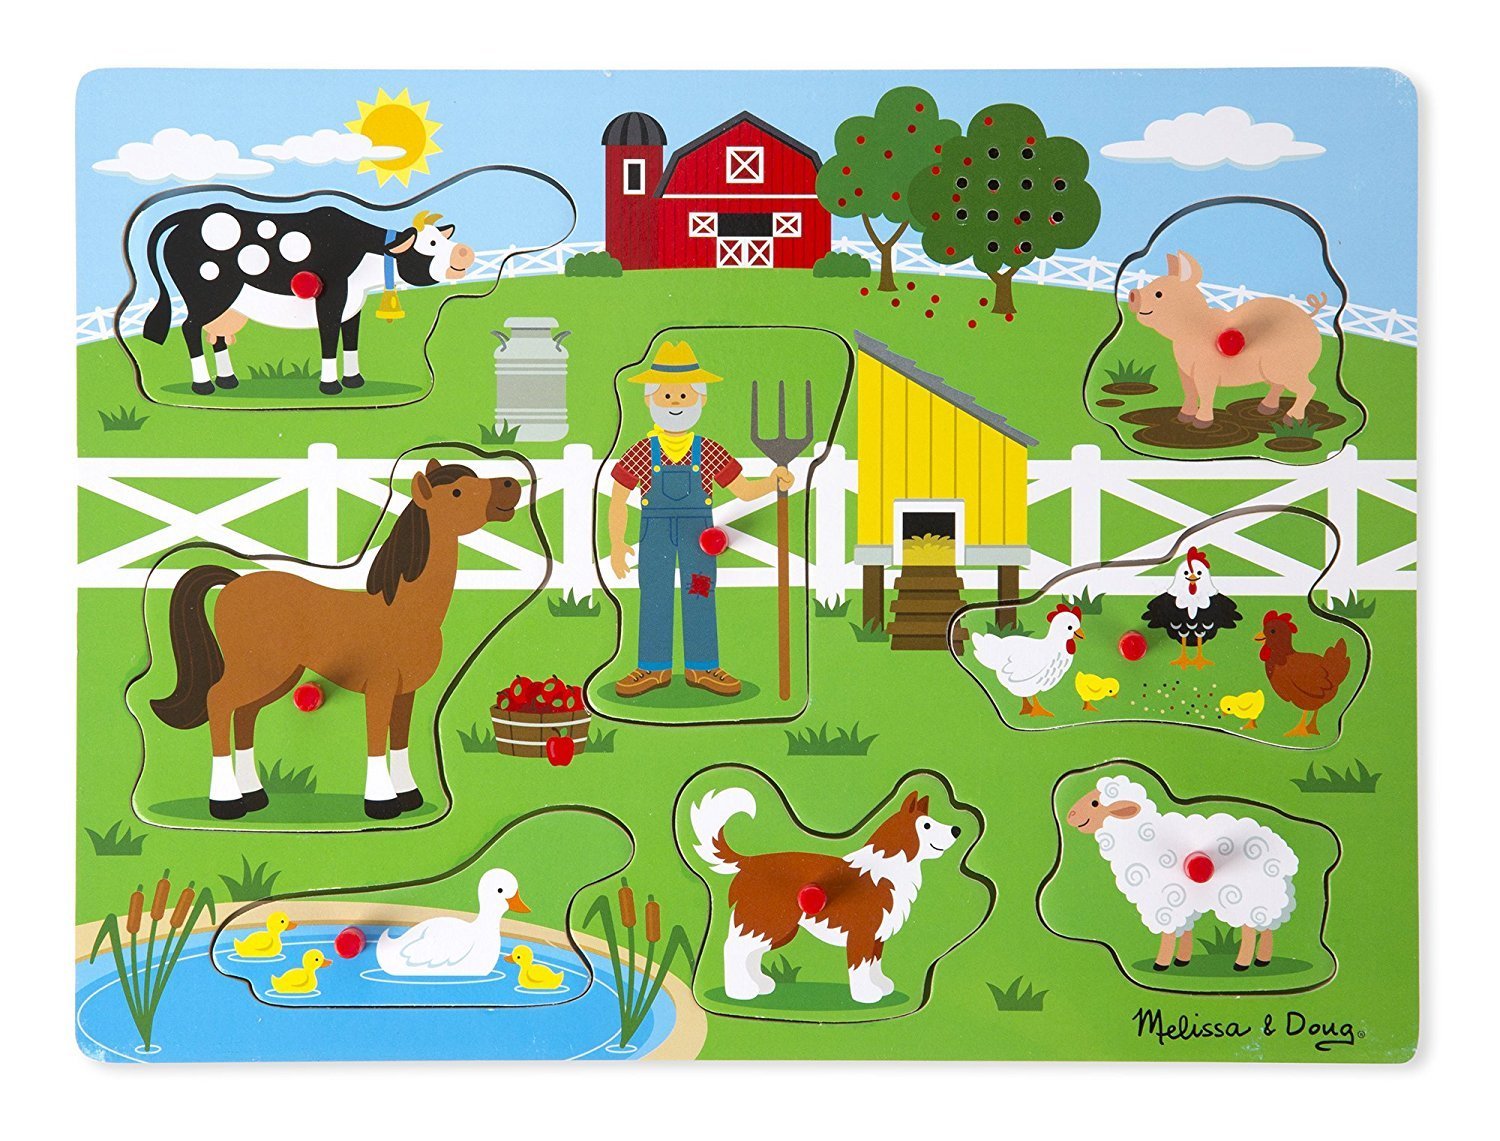 melissa & doug farm animals sound puzzle